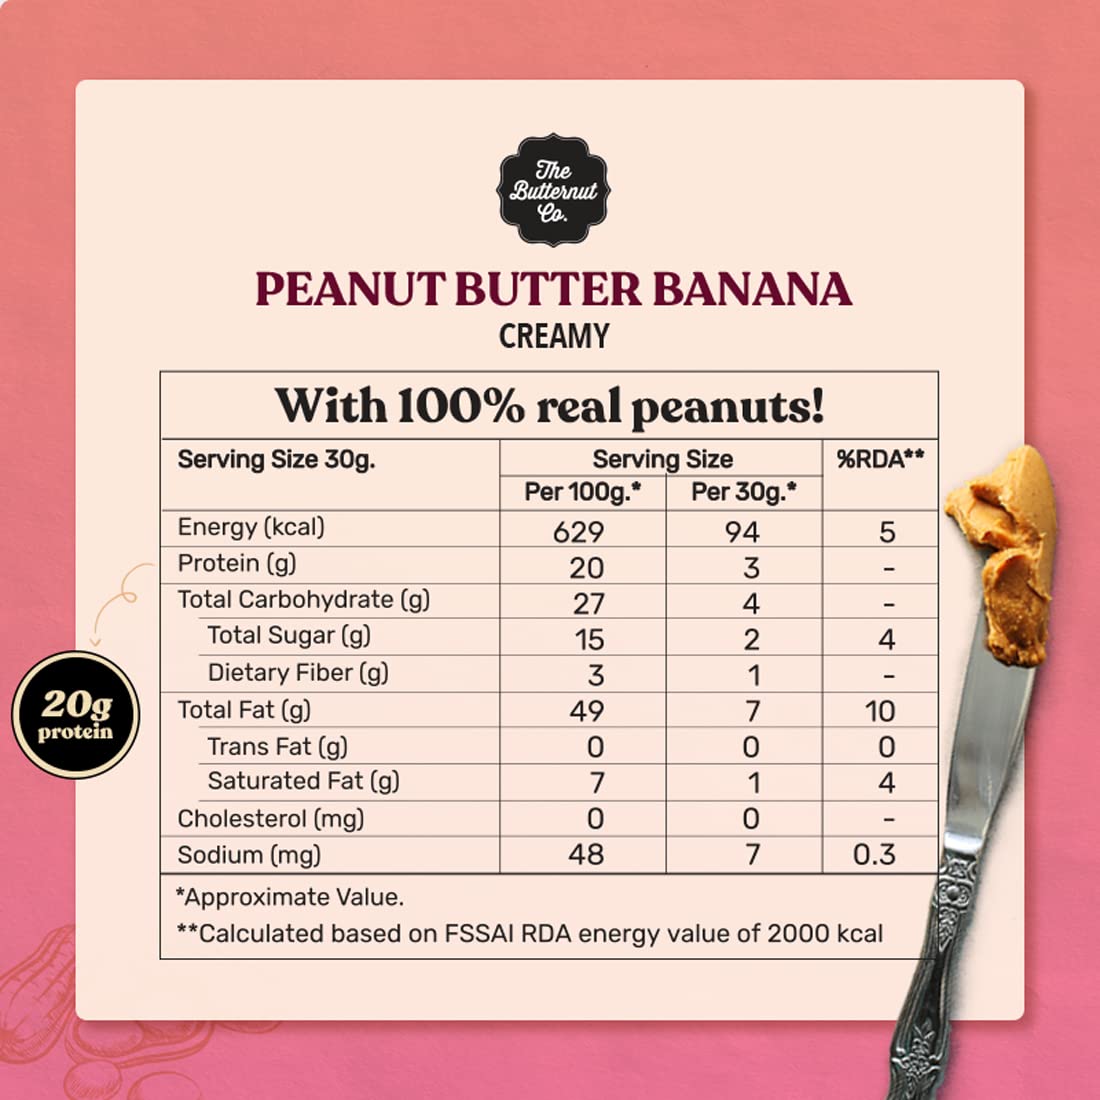 The Butternut Co. Banana Peanut Butter (Creamy) 340g | 20 g Protein | No Refined Sugar | Natural | Gluten Free | Cholesterol Free | No Trans Fat